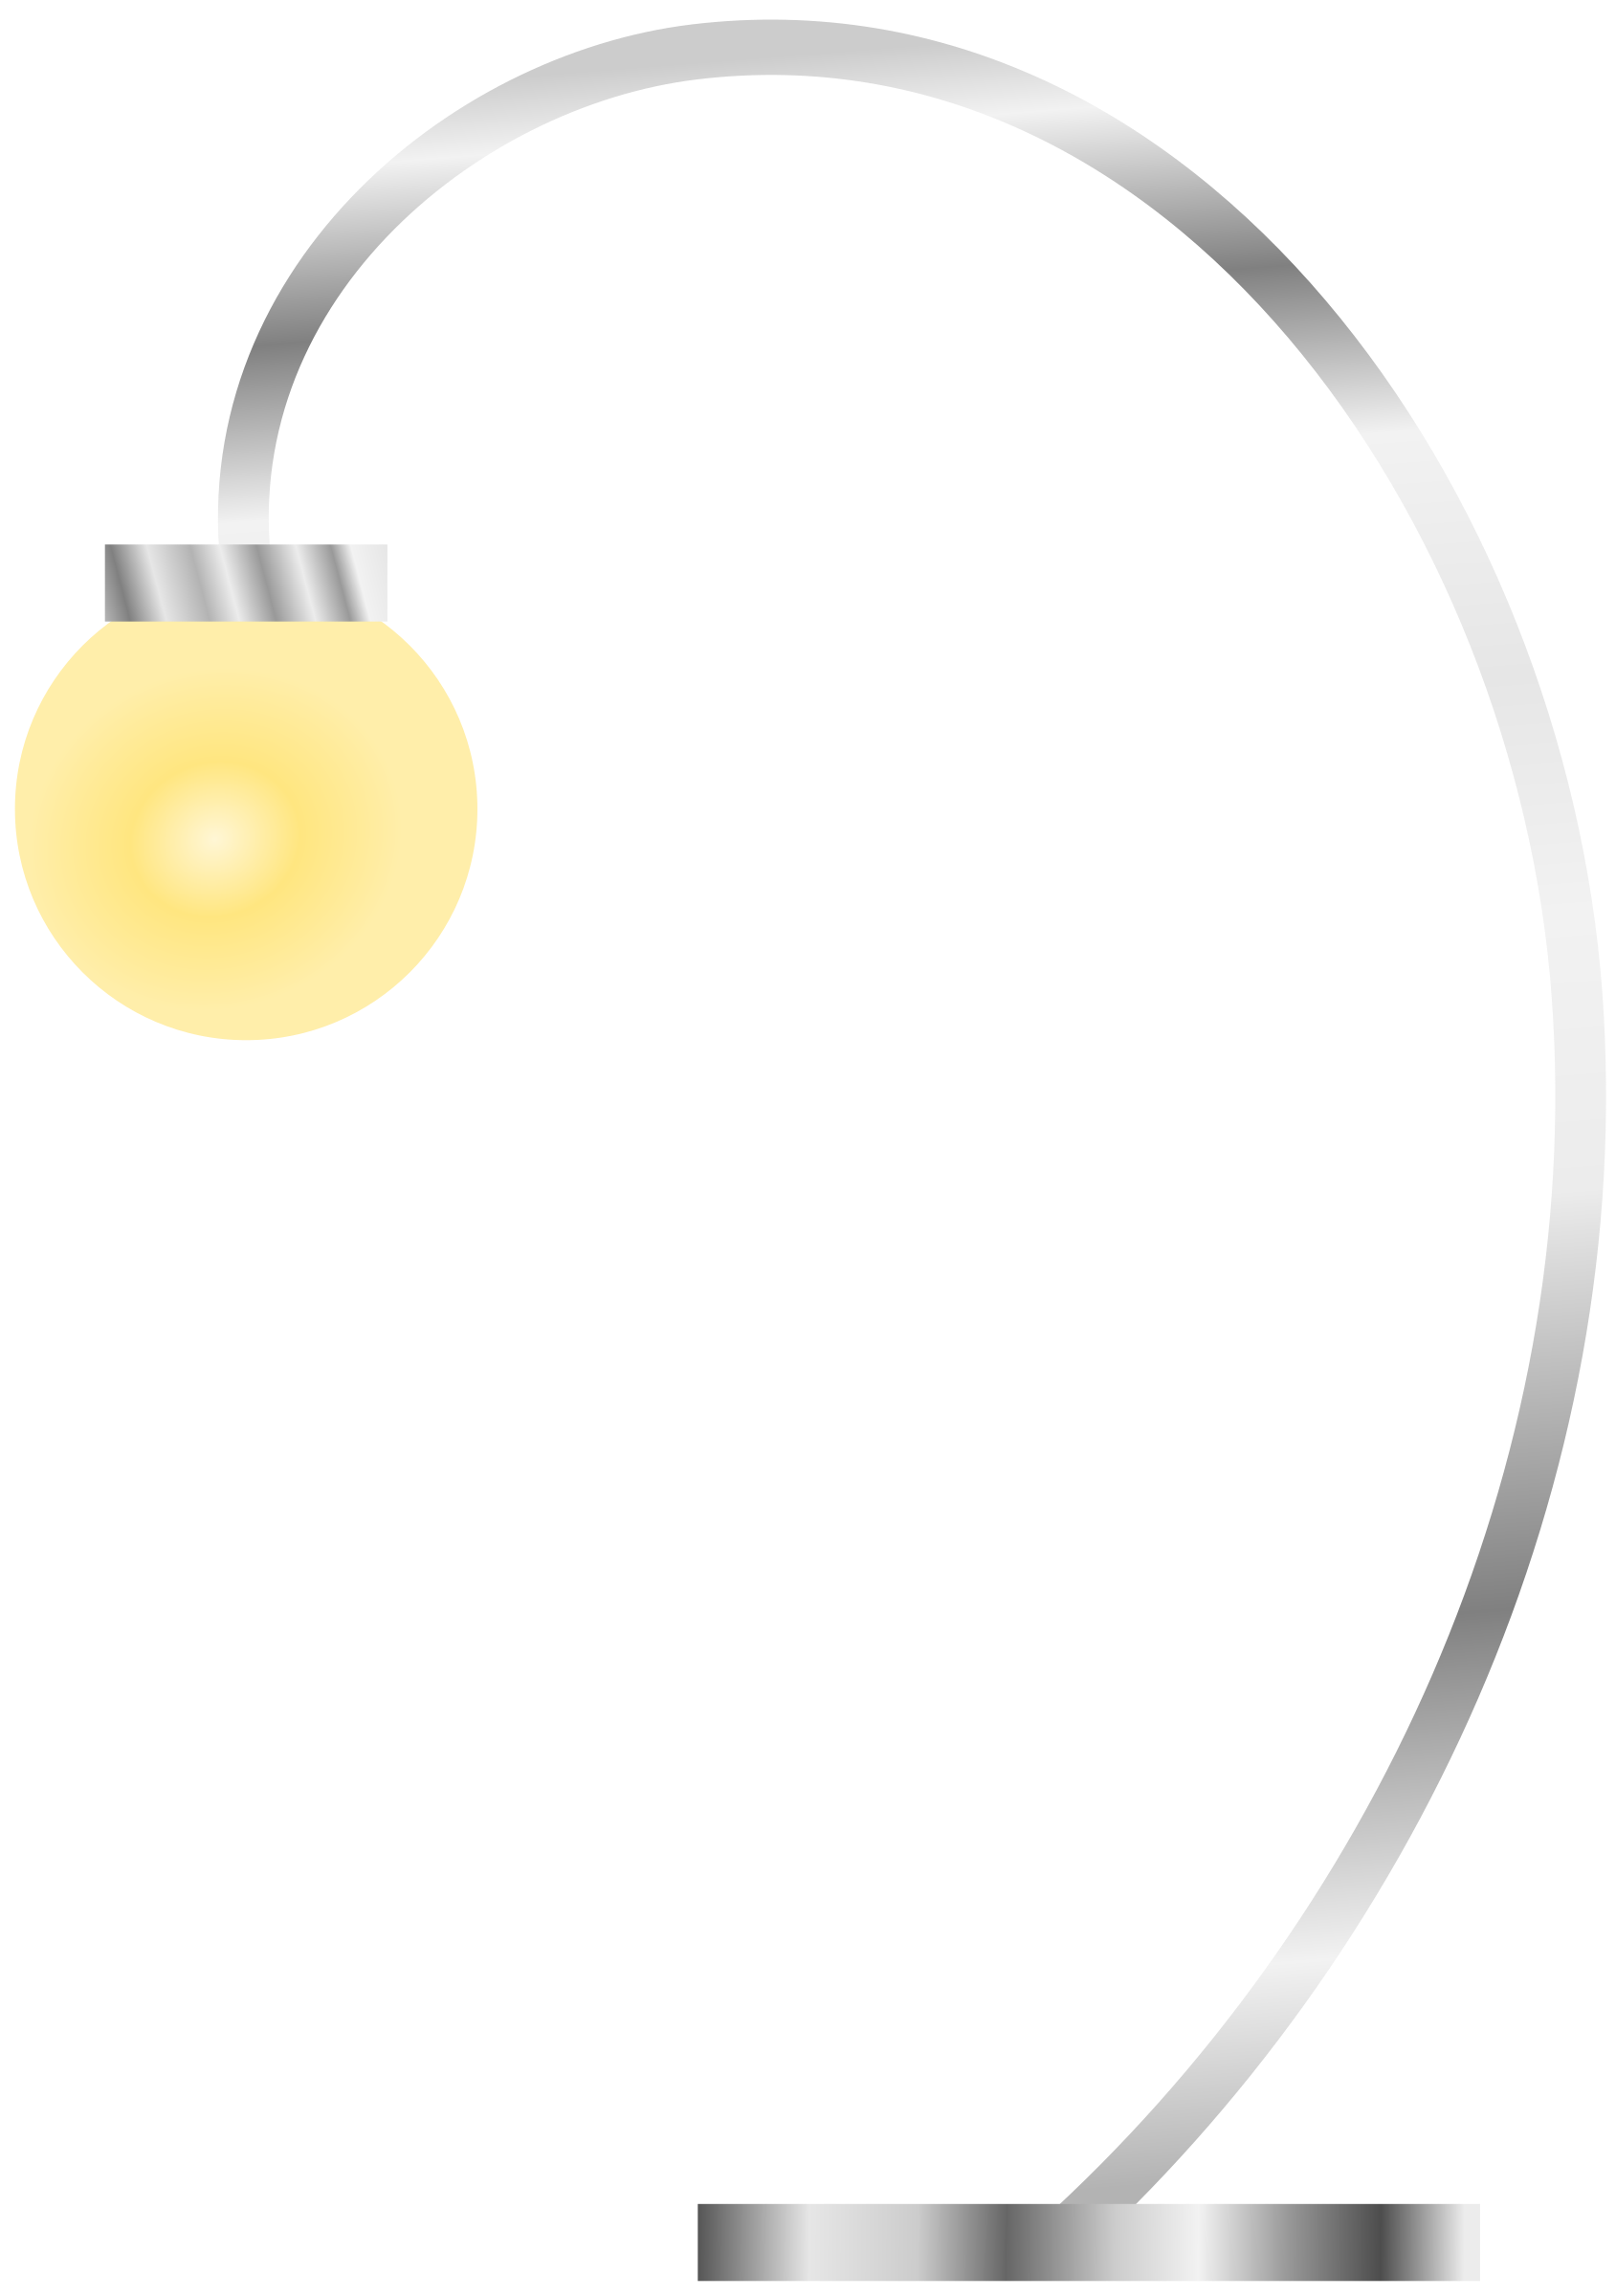 lamp clipart modern lamp